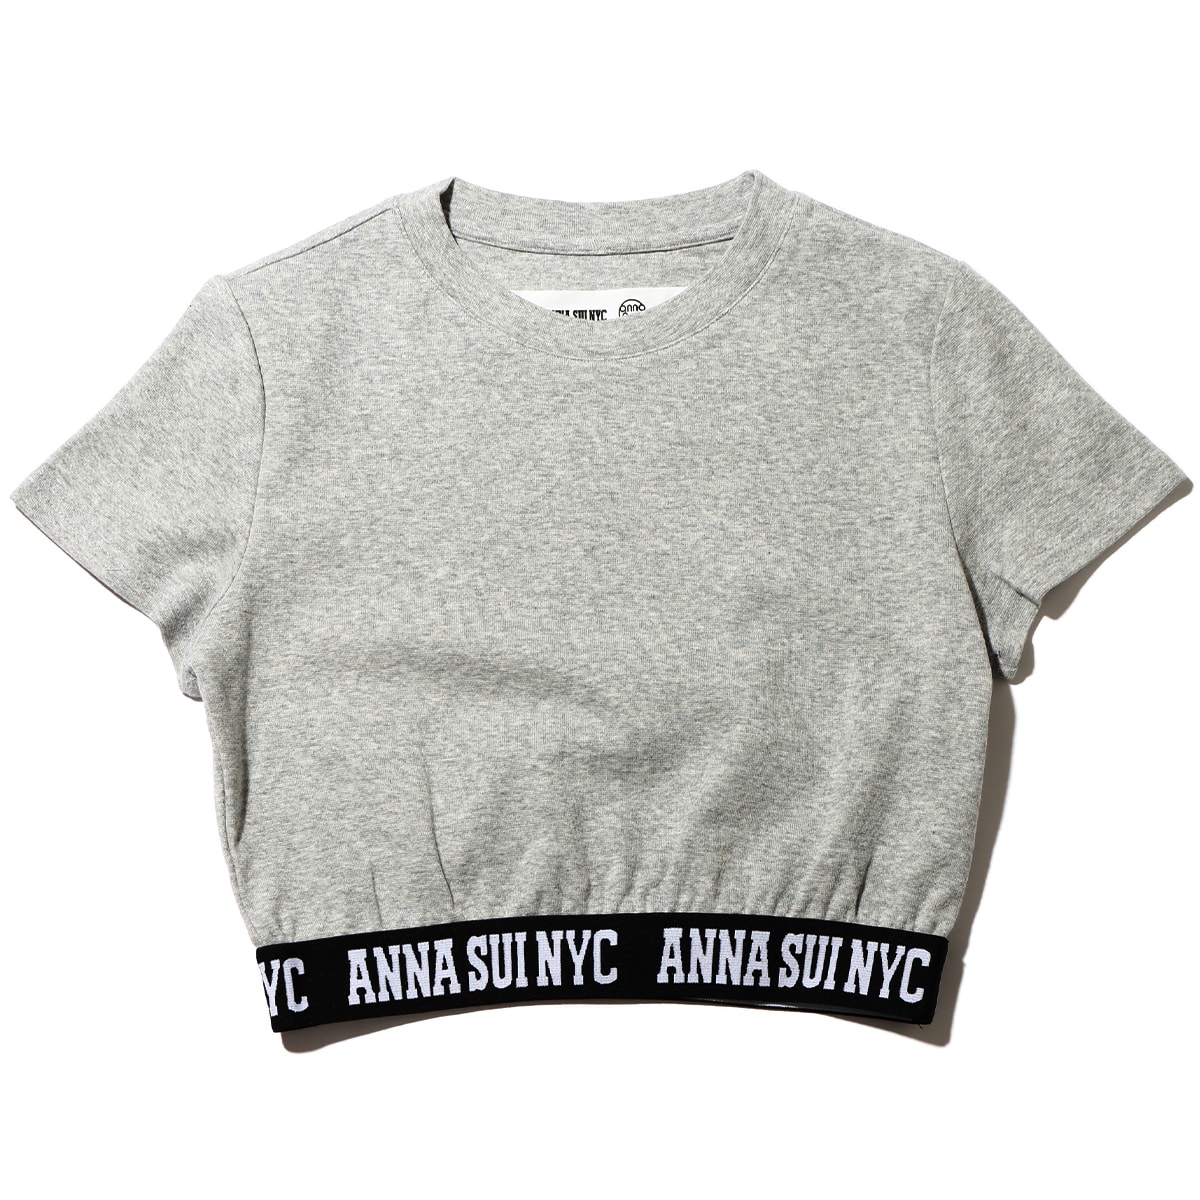 ANNA SUI NYC ロゴテープ チビTシャツ GRAY 22HO-I_photo_large